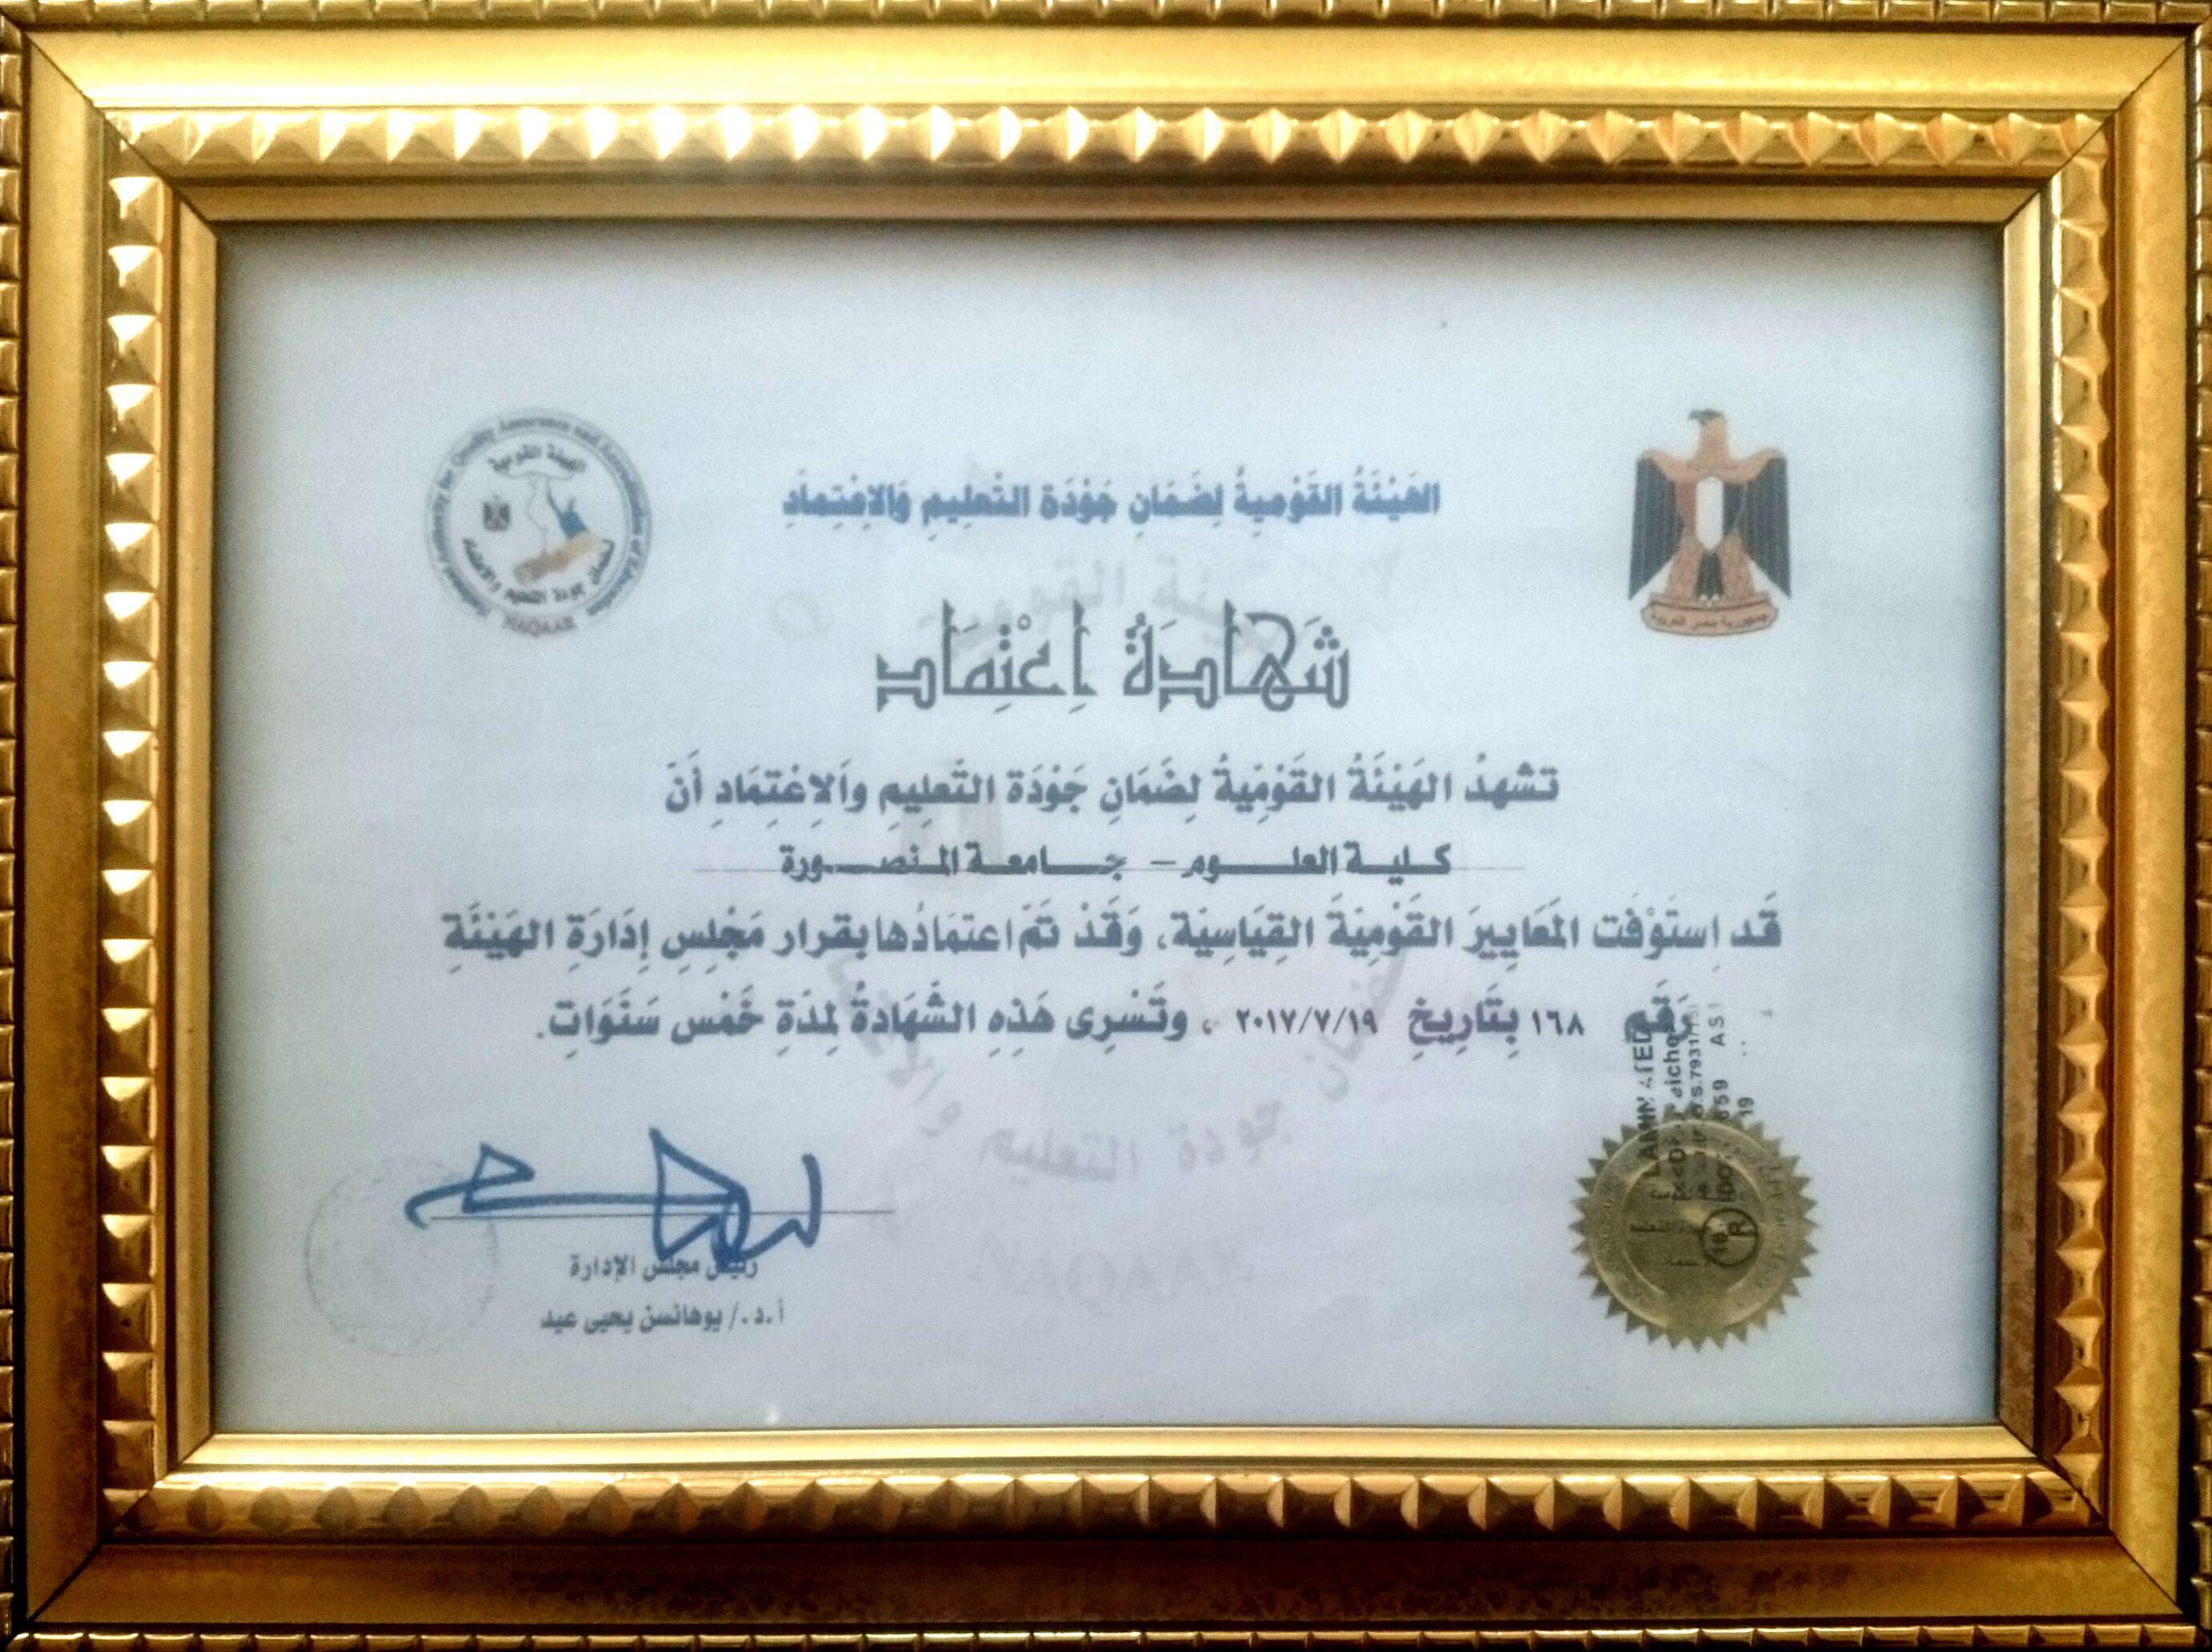 Accreditation certificate